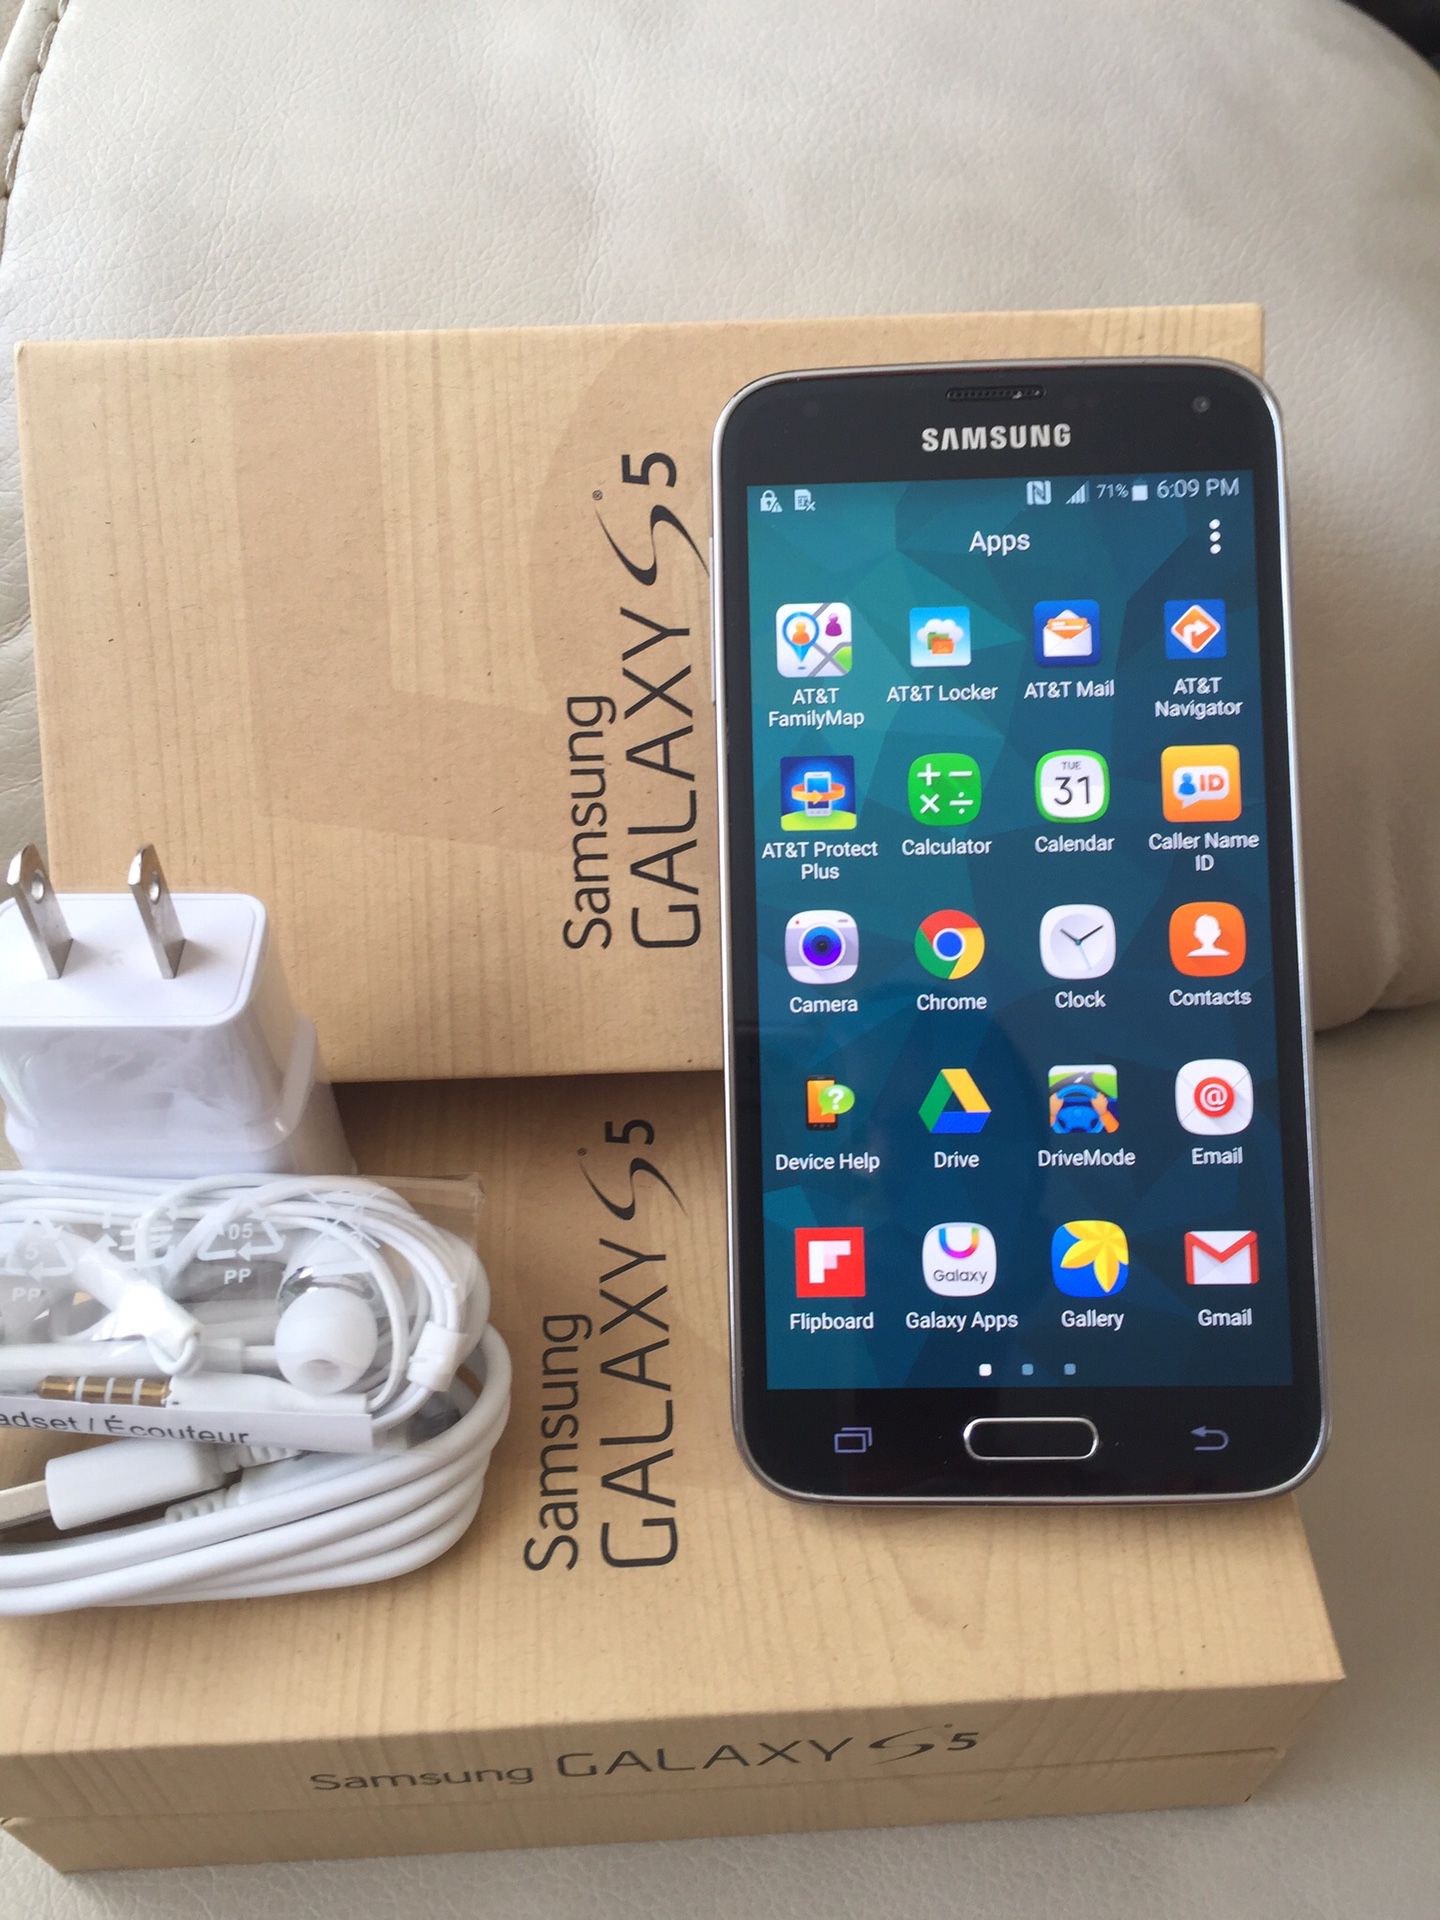 Samsung Galaxy s5,32 GB, excellent condition factory unlocked